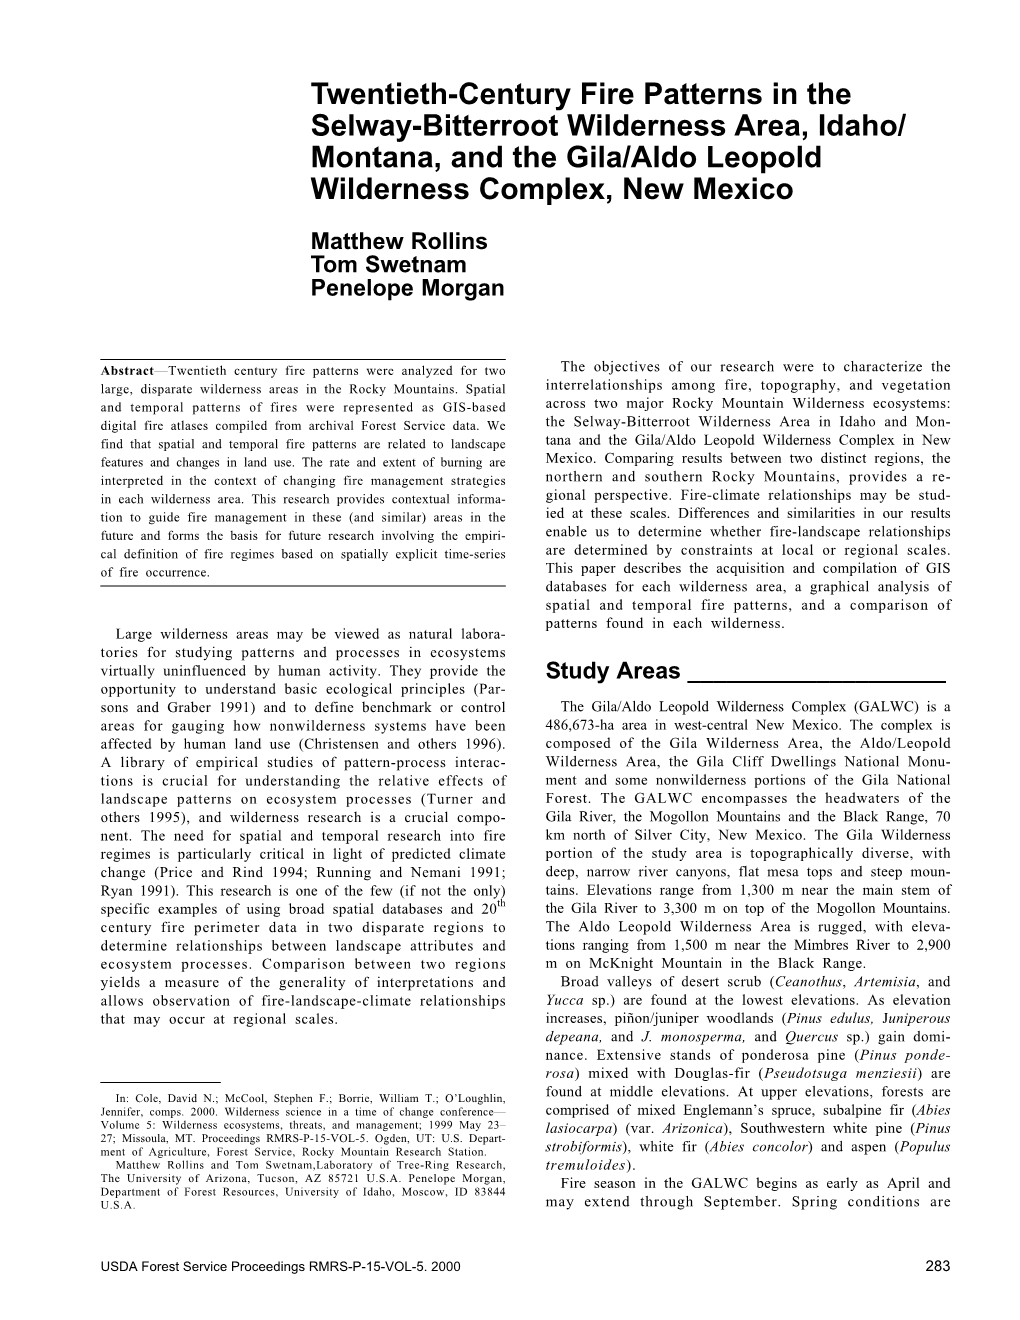 Montana, and the Gila/Aldo Leopold Wilderness Complex, New Mexico